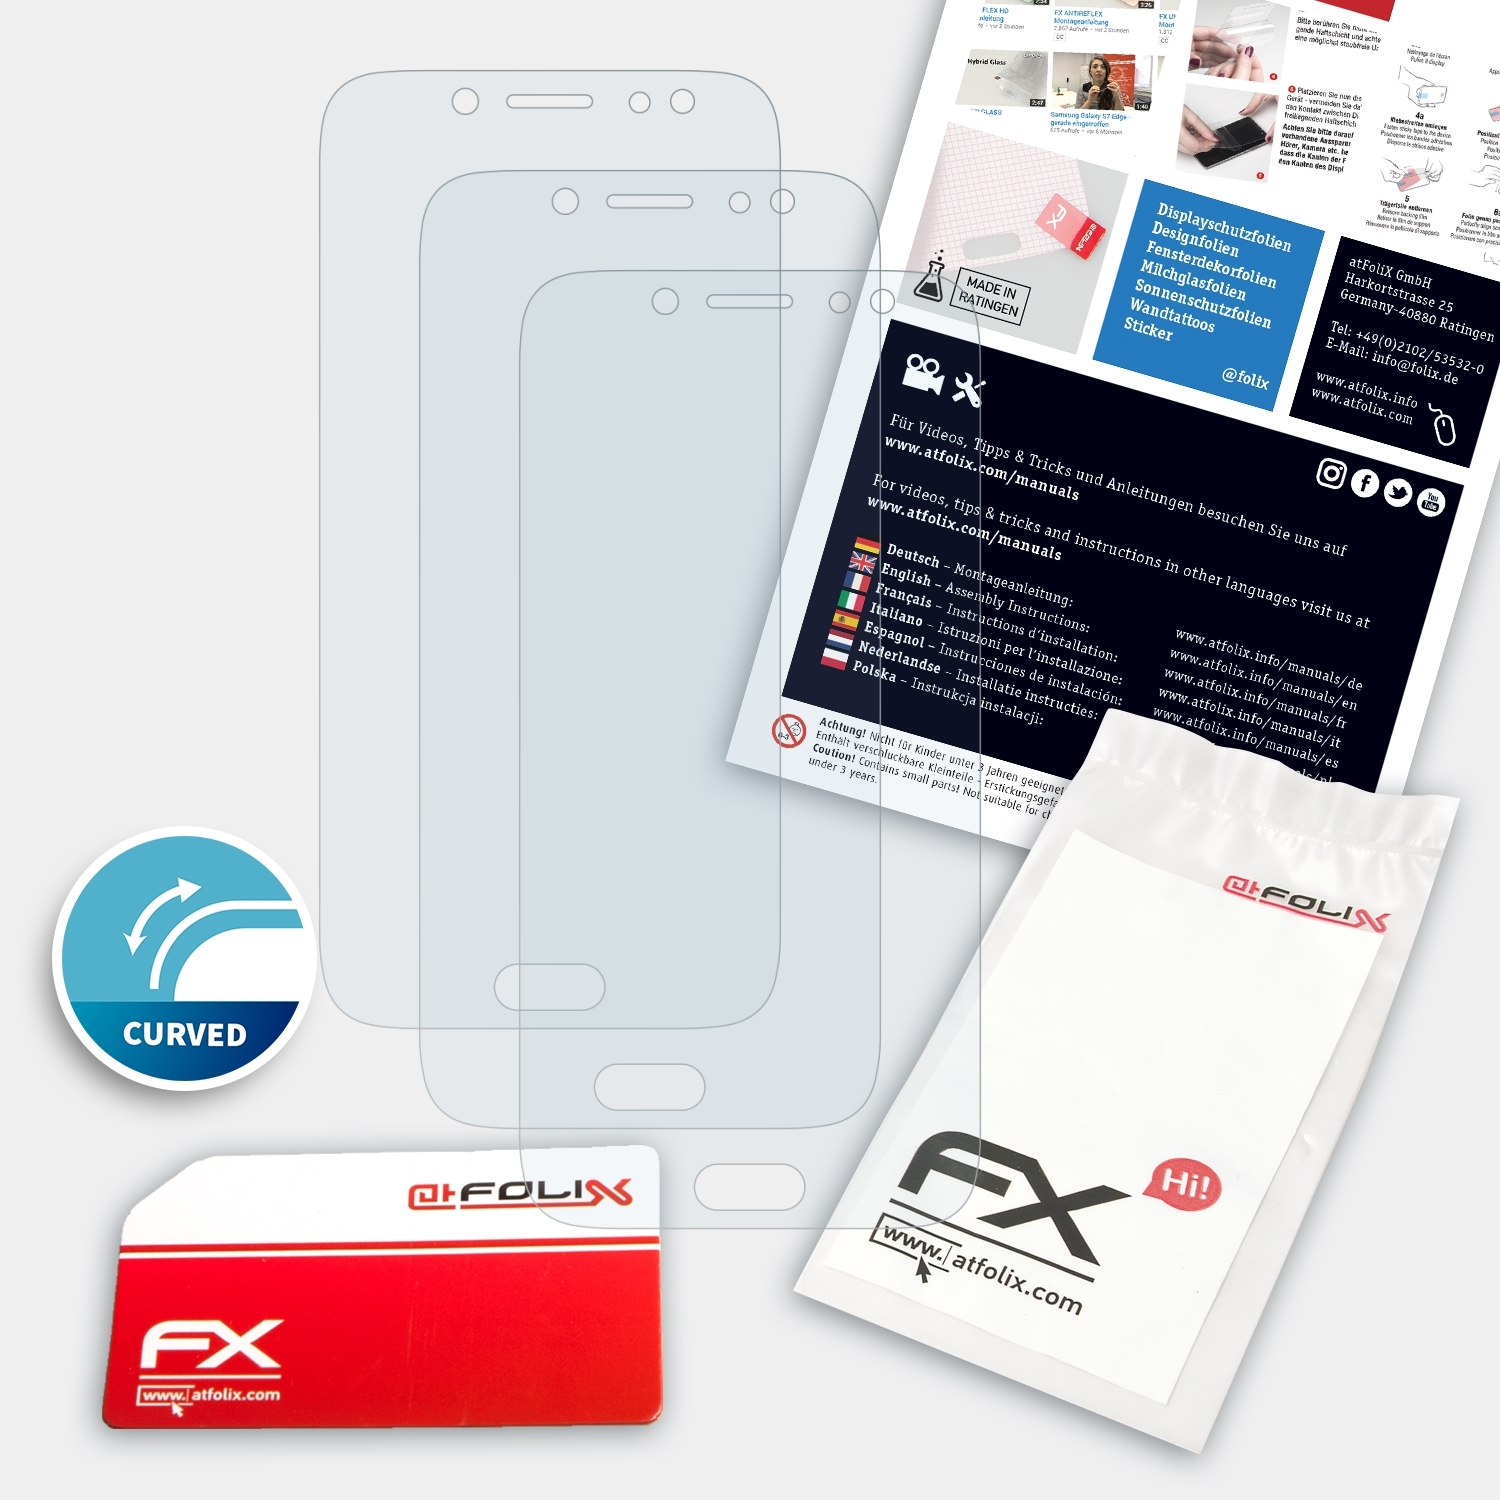 Pro) 3x FX-ActiFleX Displayschutz(für ATFOLIX J7 Samsung Galaxy